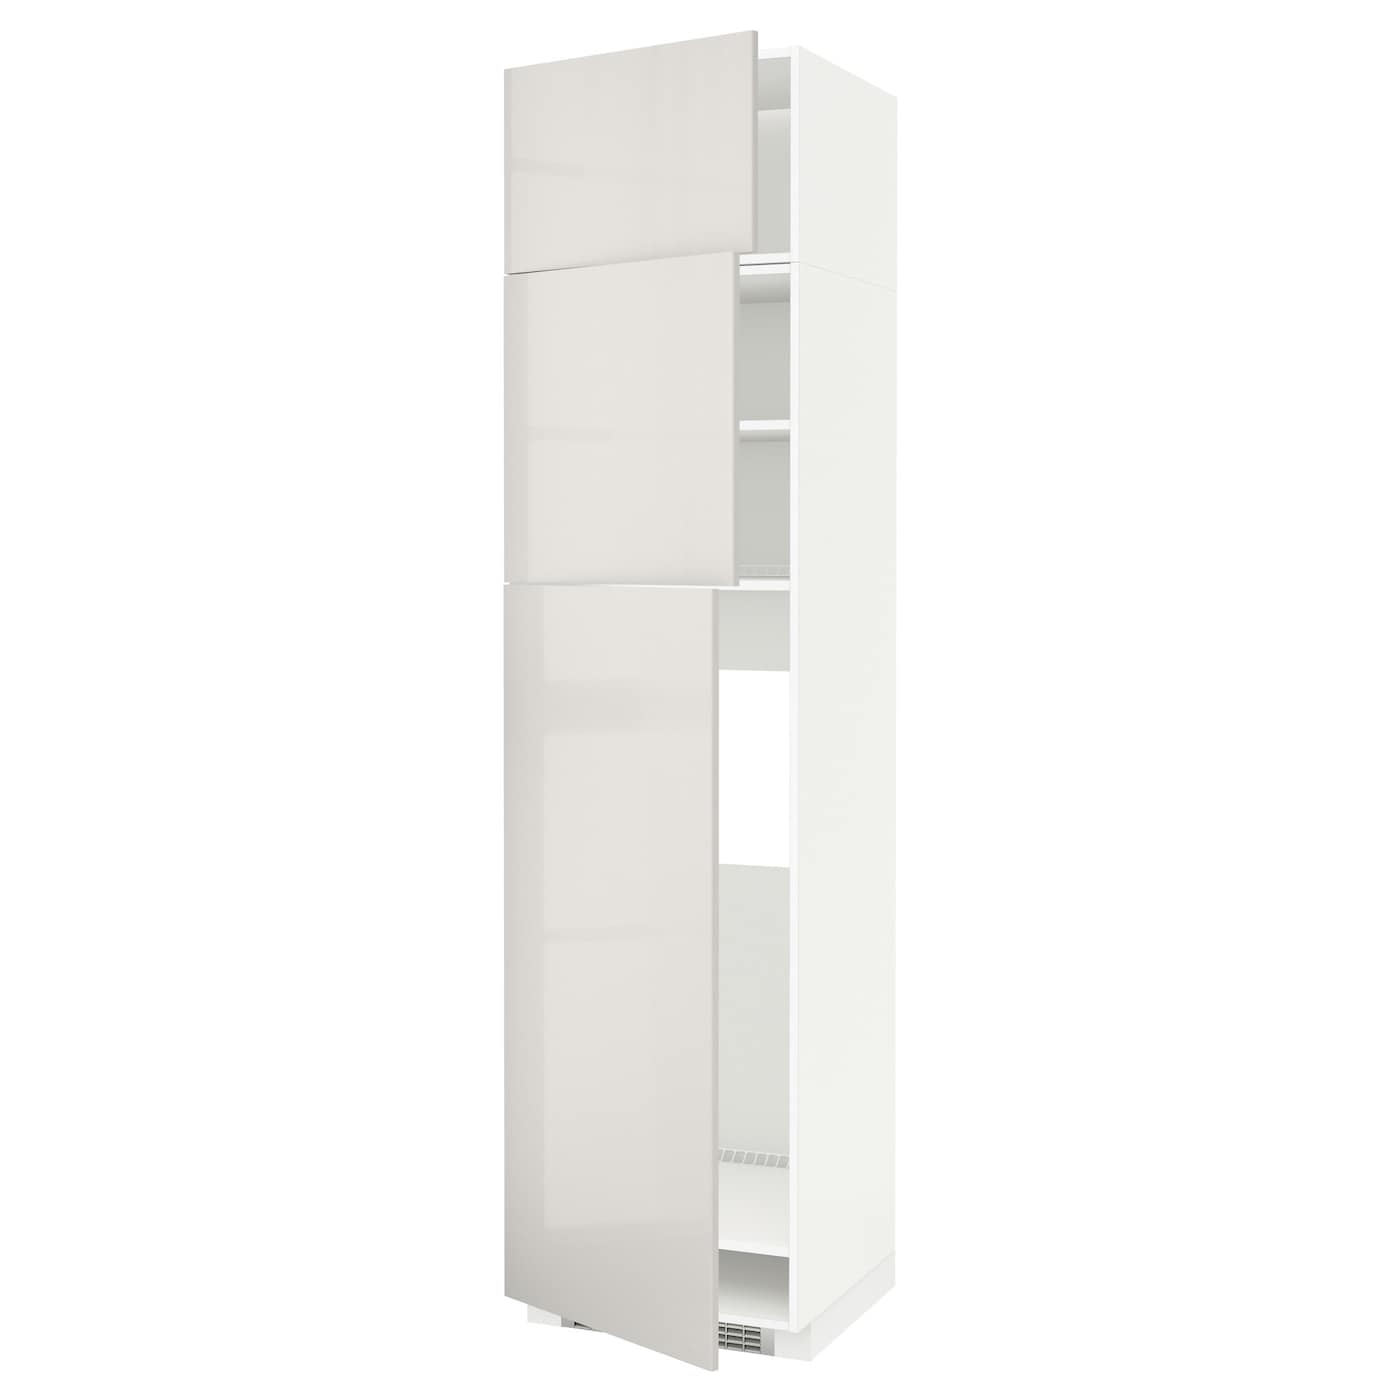 Высокий холодильный шкаф - IKEA METOD/МЕТОД ИКЕА, 60х60х240 см, светло-серый/белый глянцевый